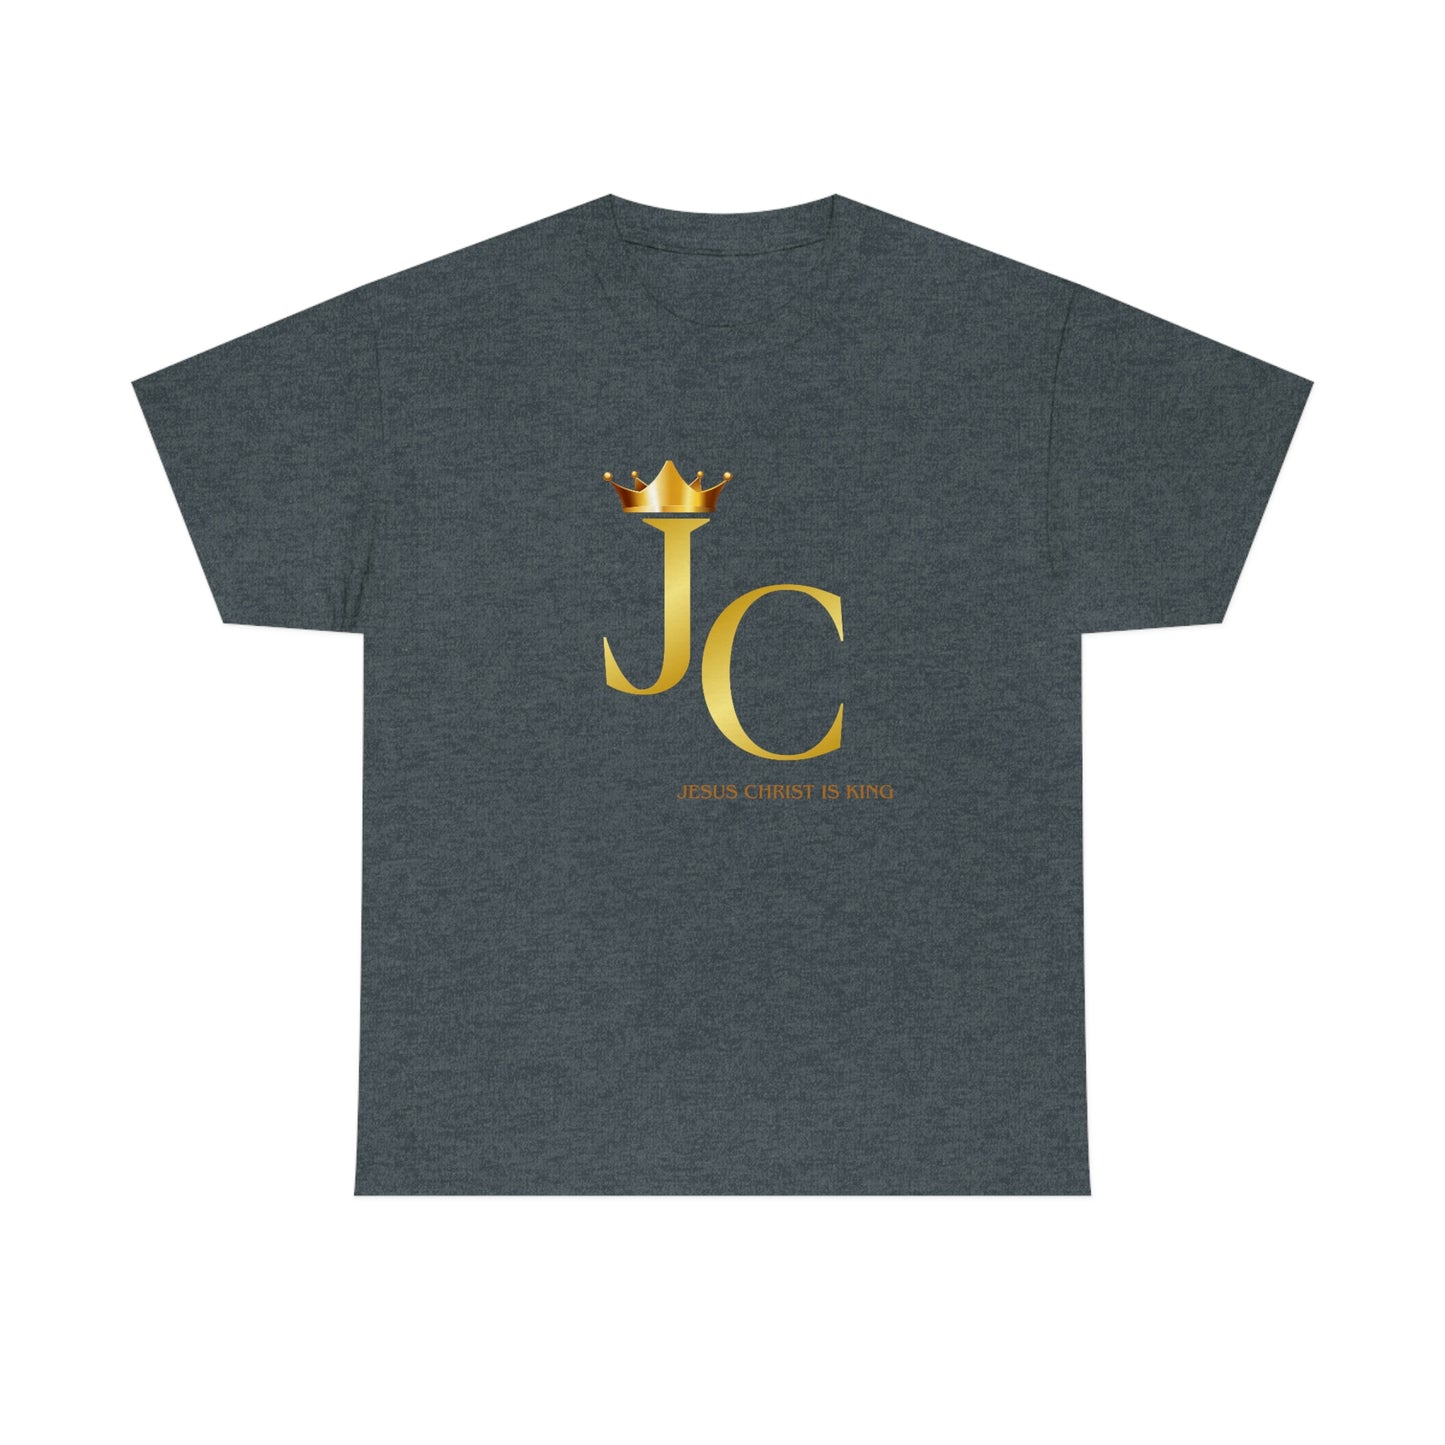 JC (JESUS CHRIST IS KING) T-SHIRT